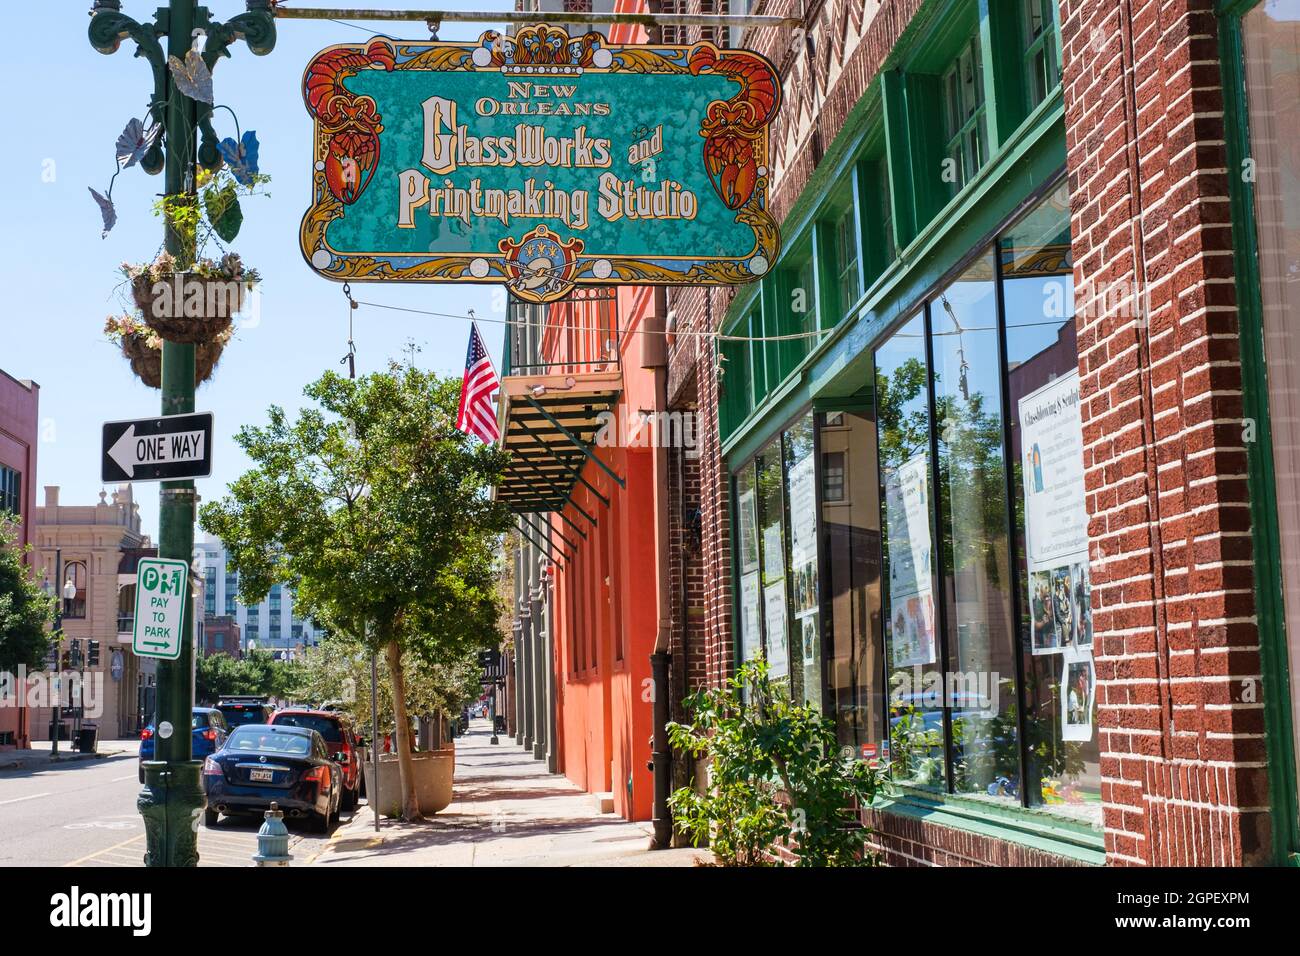 NEW ORLEANS, LA, USA - 26. SEPTEMBER 2021: New Orleans Glassworks and Printmaking Studio on Magazine Street Stockfoto